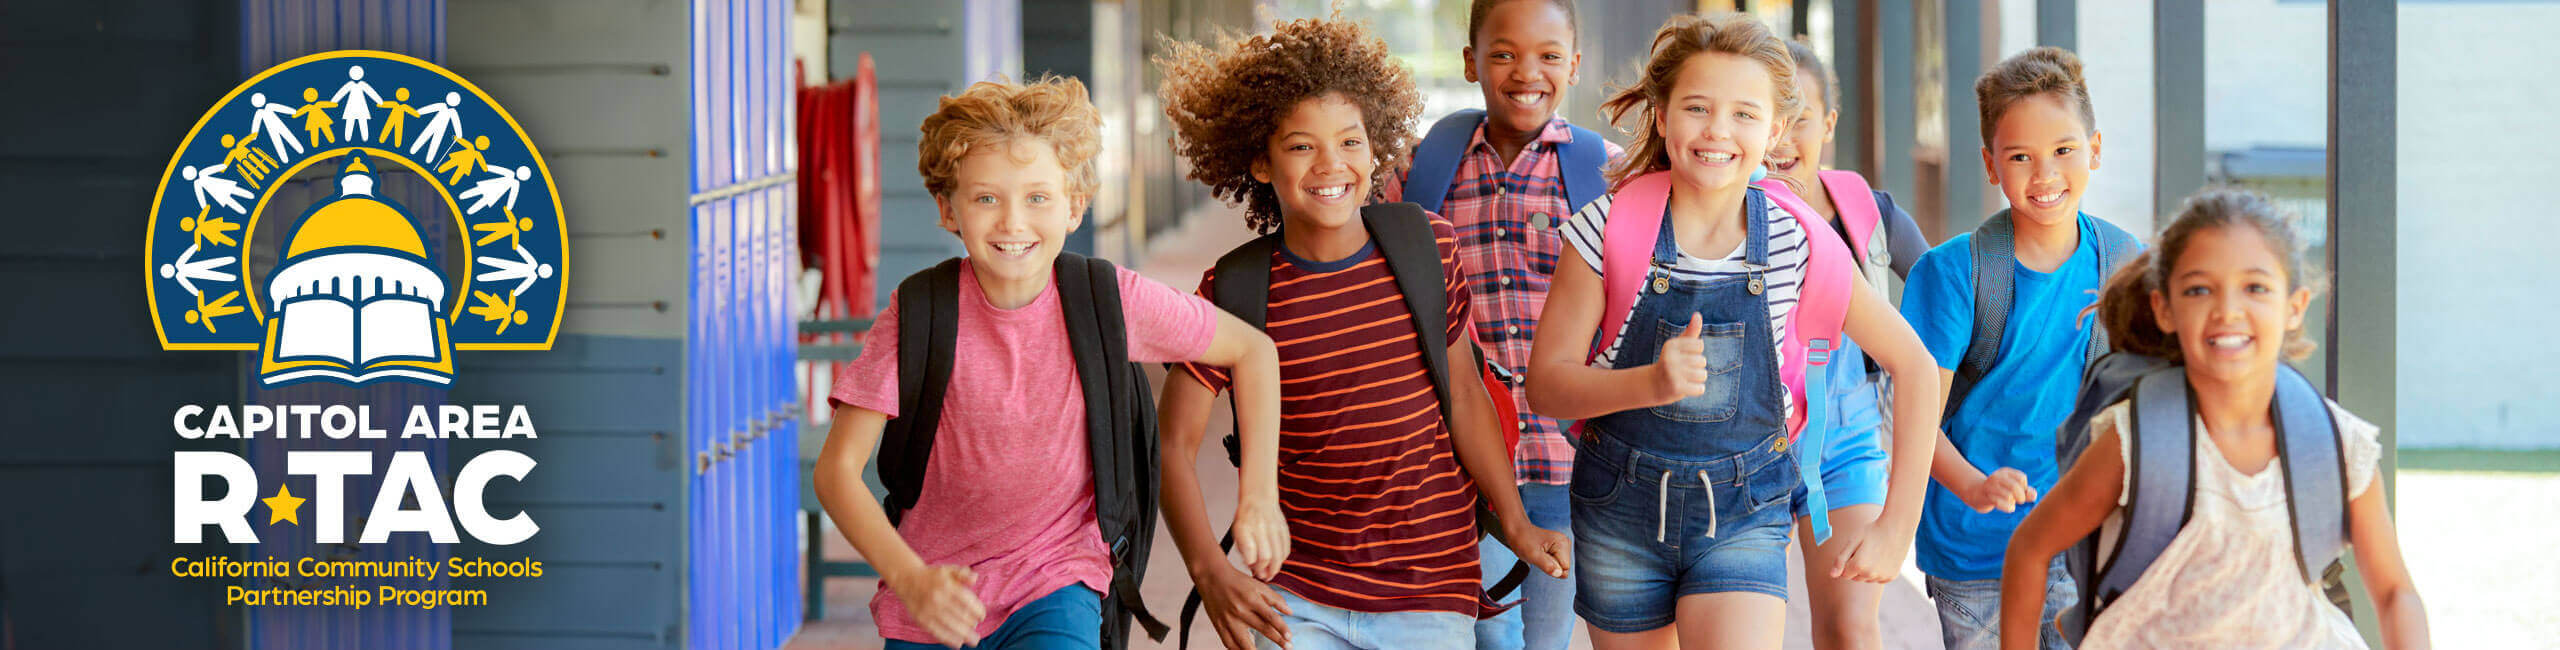 A group of school kids running through school hallway.